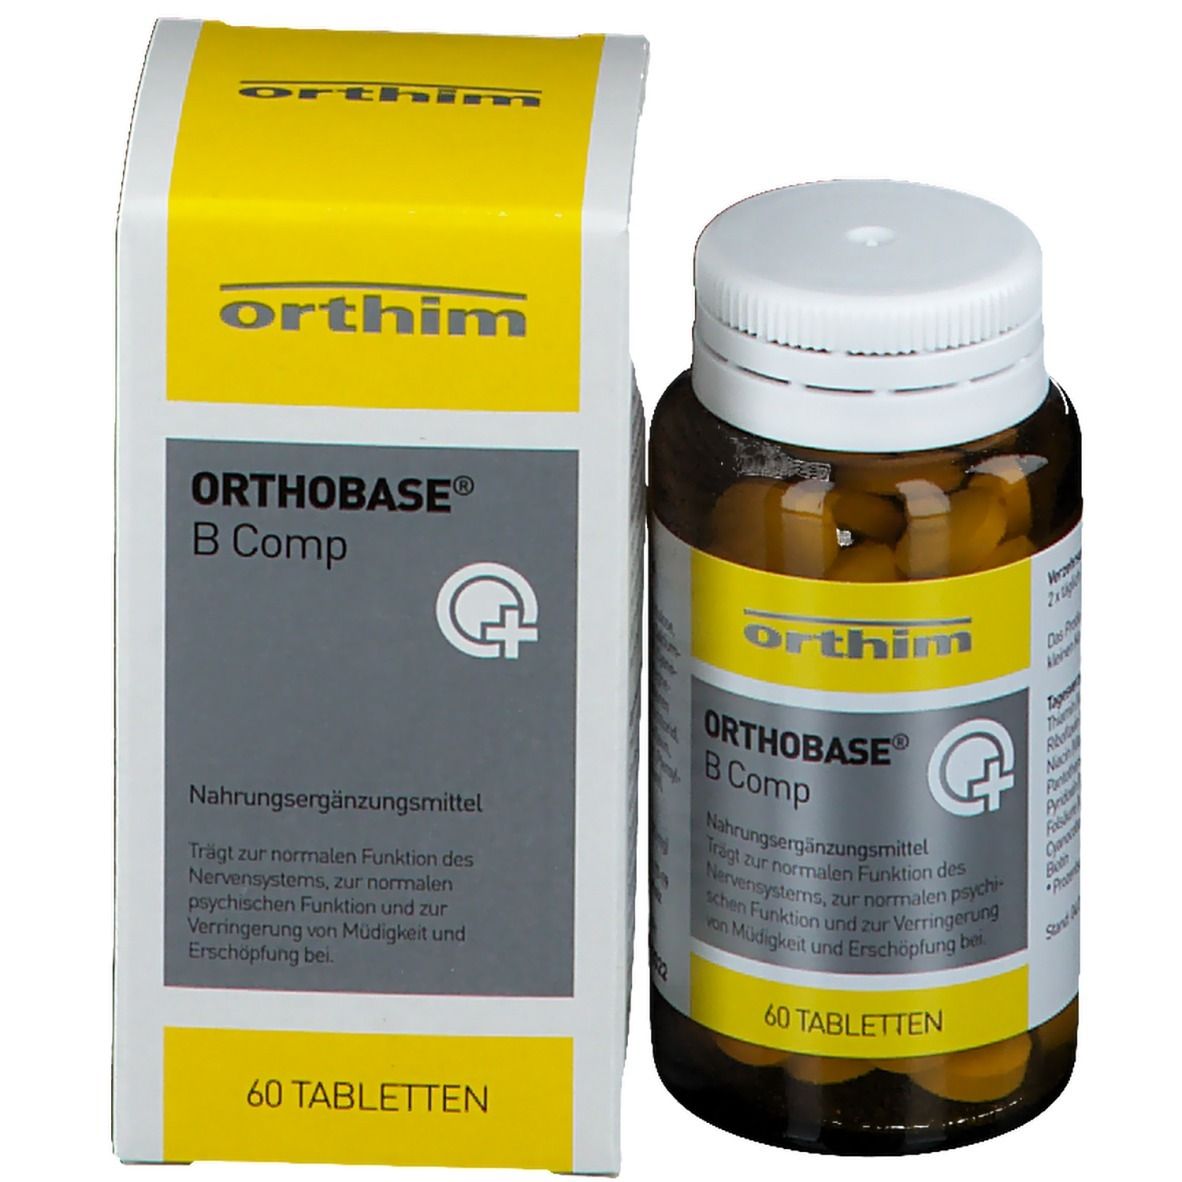 Orthobase® B Comp.